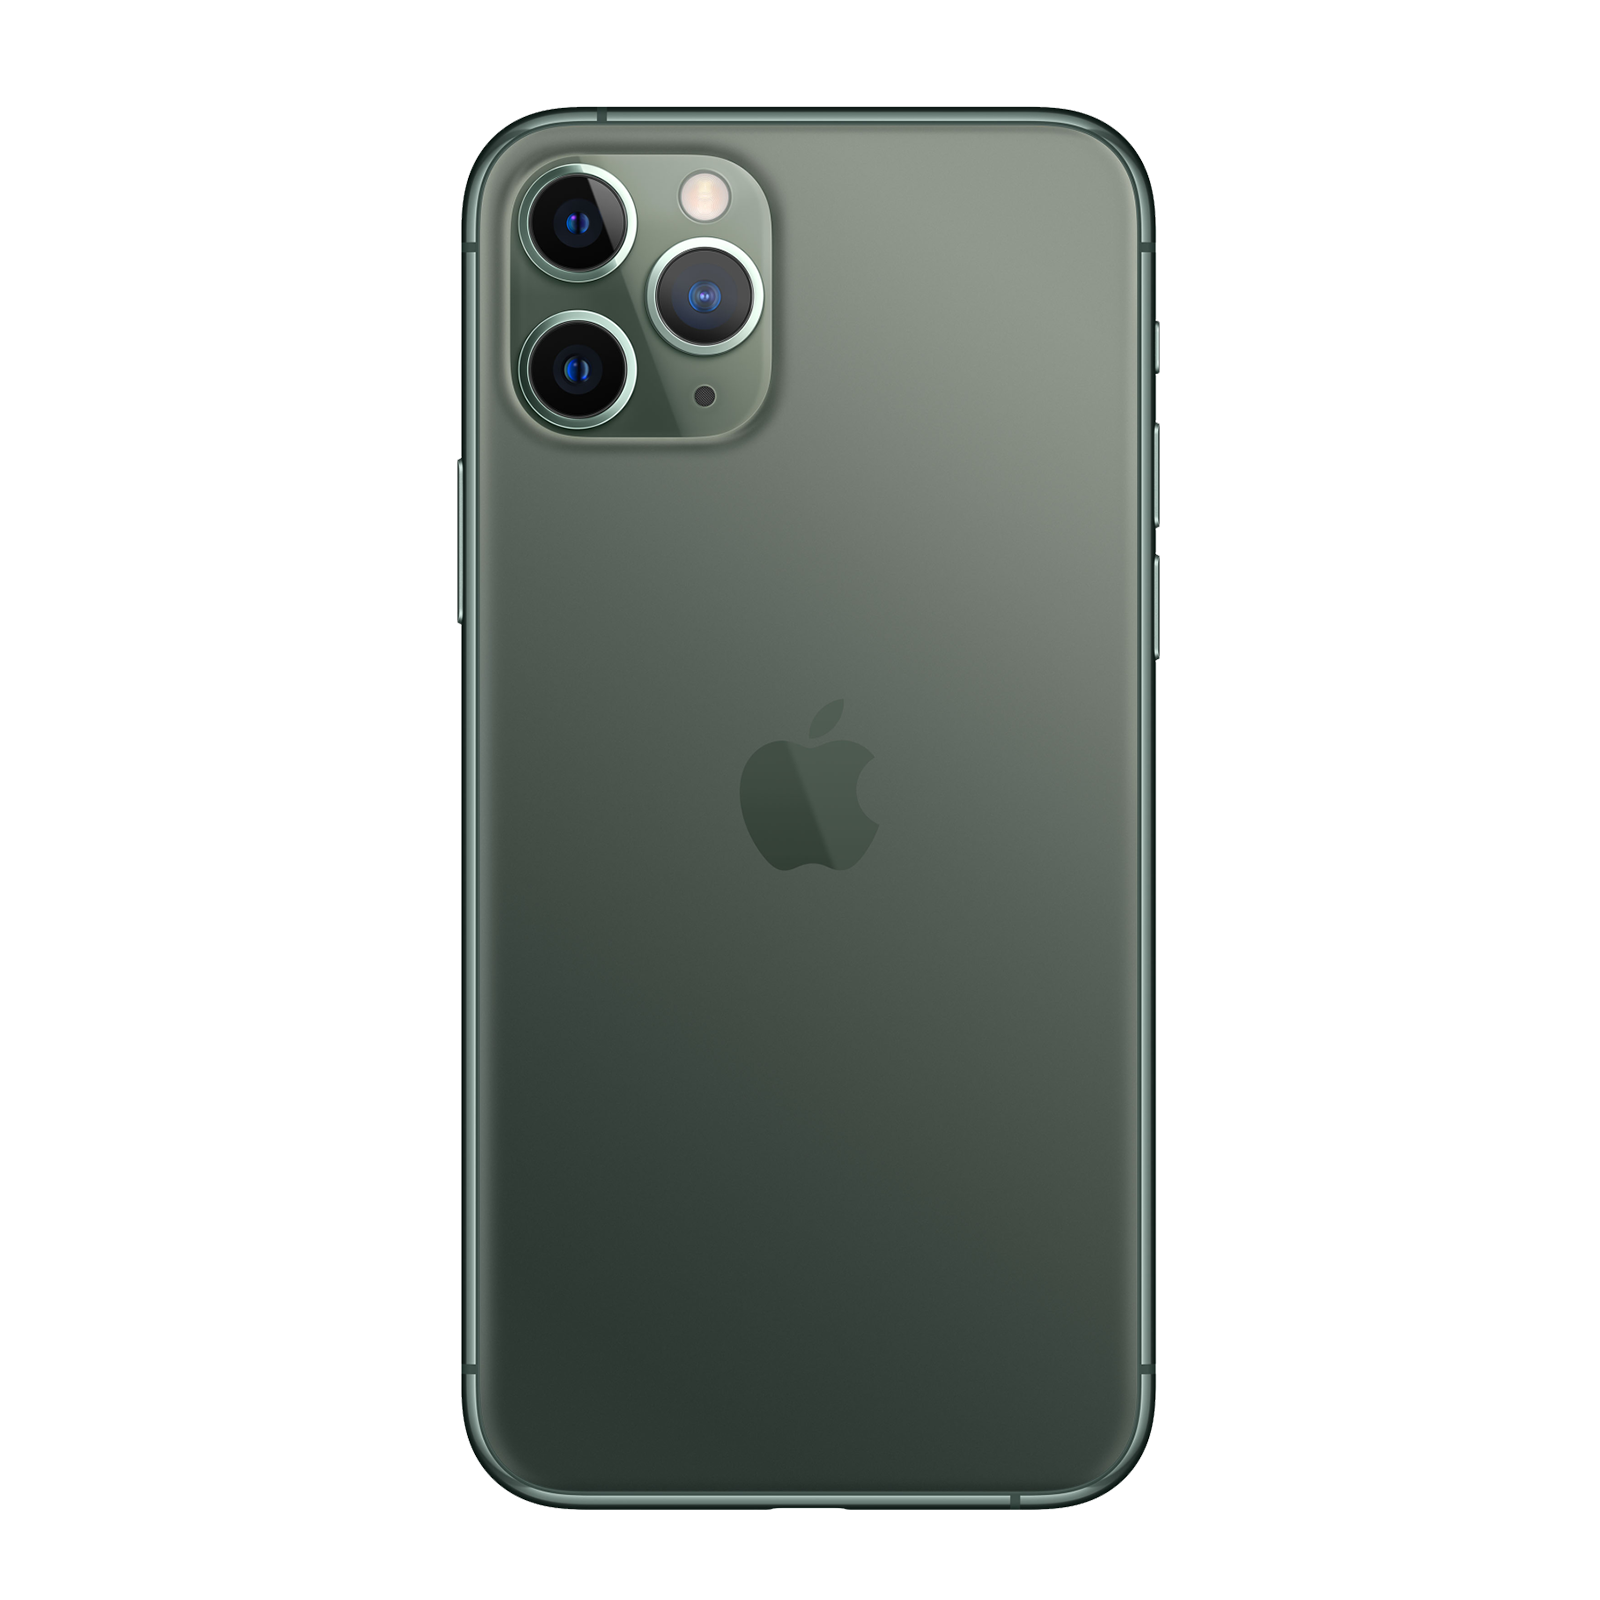 Apple iPhone 11 Pro Max 256GB Midnight Green Fair - Unlocked